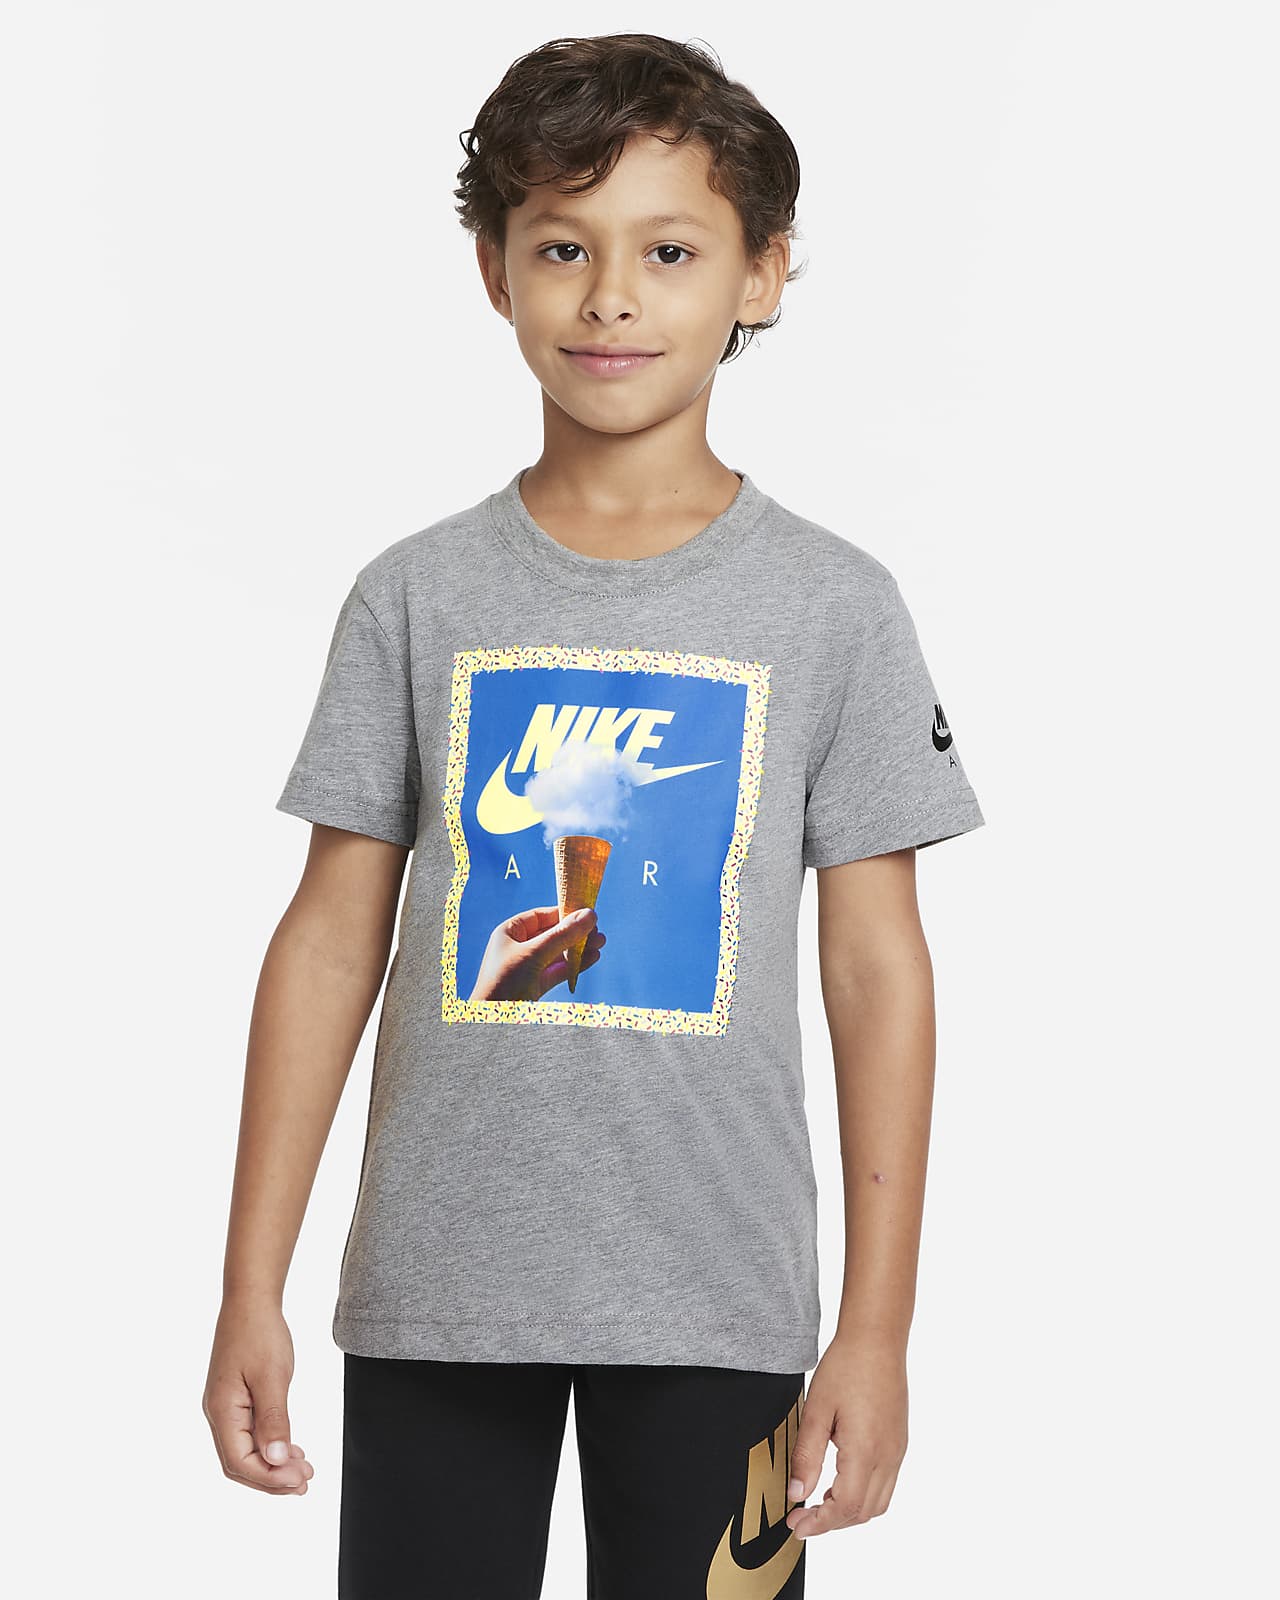 Playera para niños talla pequeña Air. Nike.com